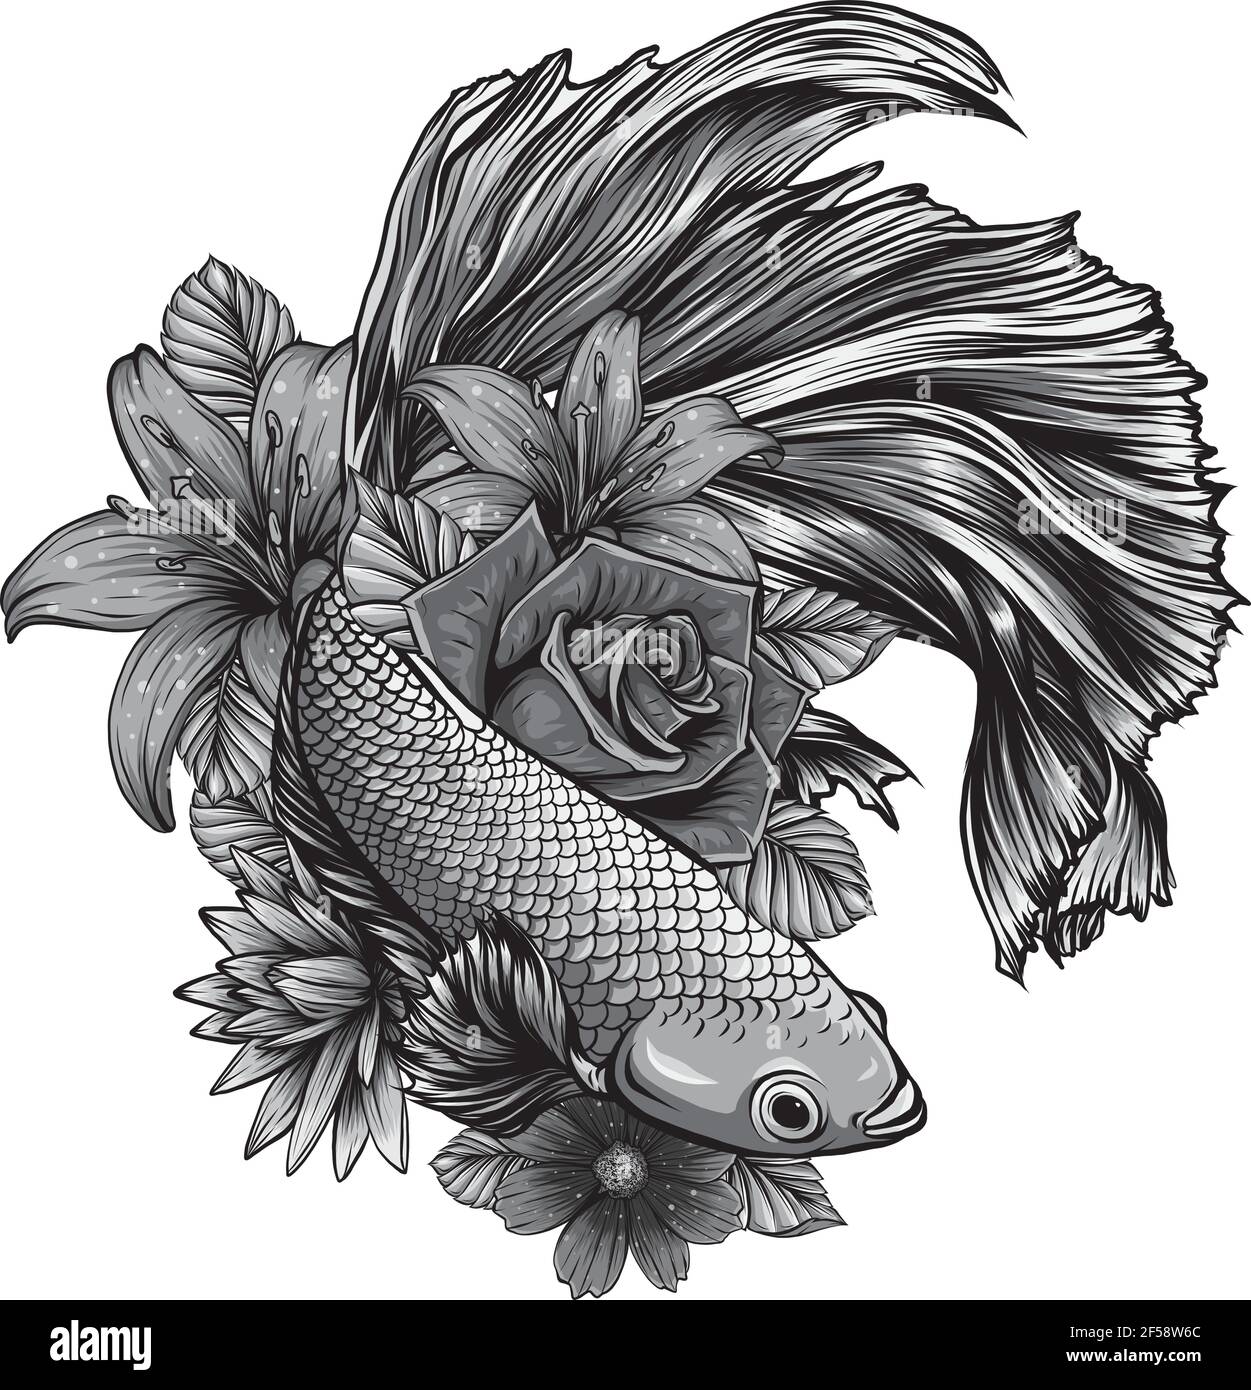 Premium Vector  Vector illustration of a siamese fighting fish also known  as betta fish